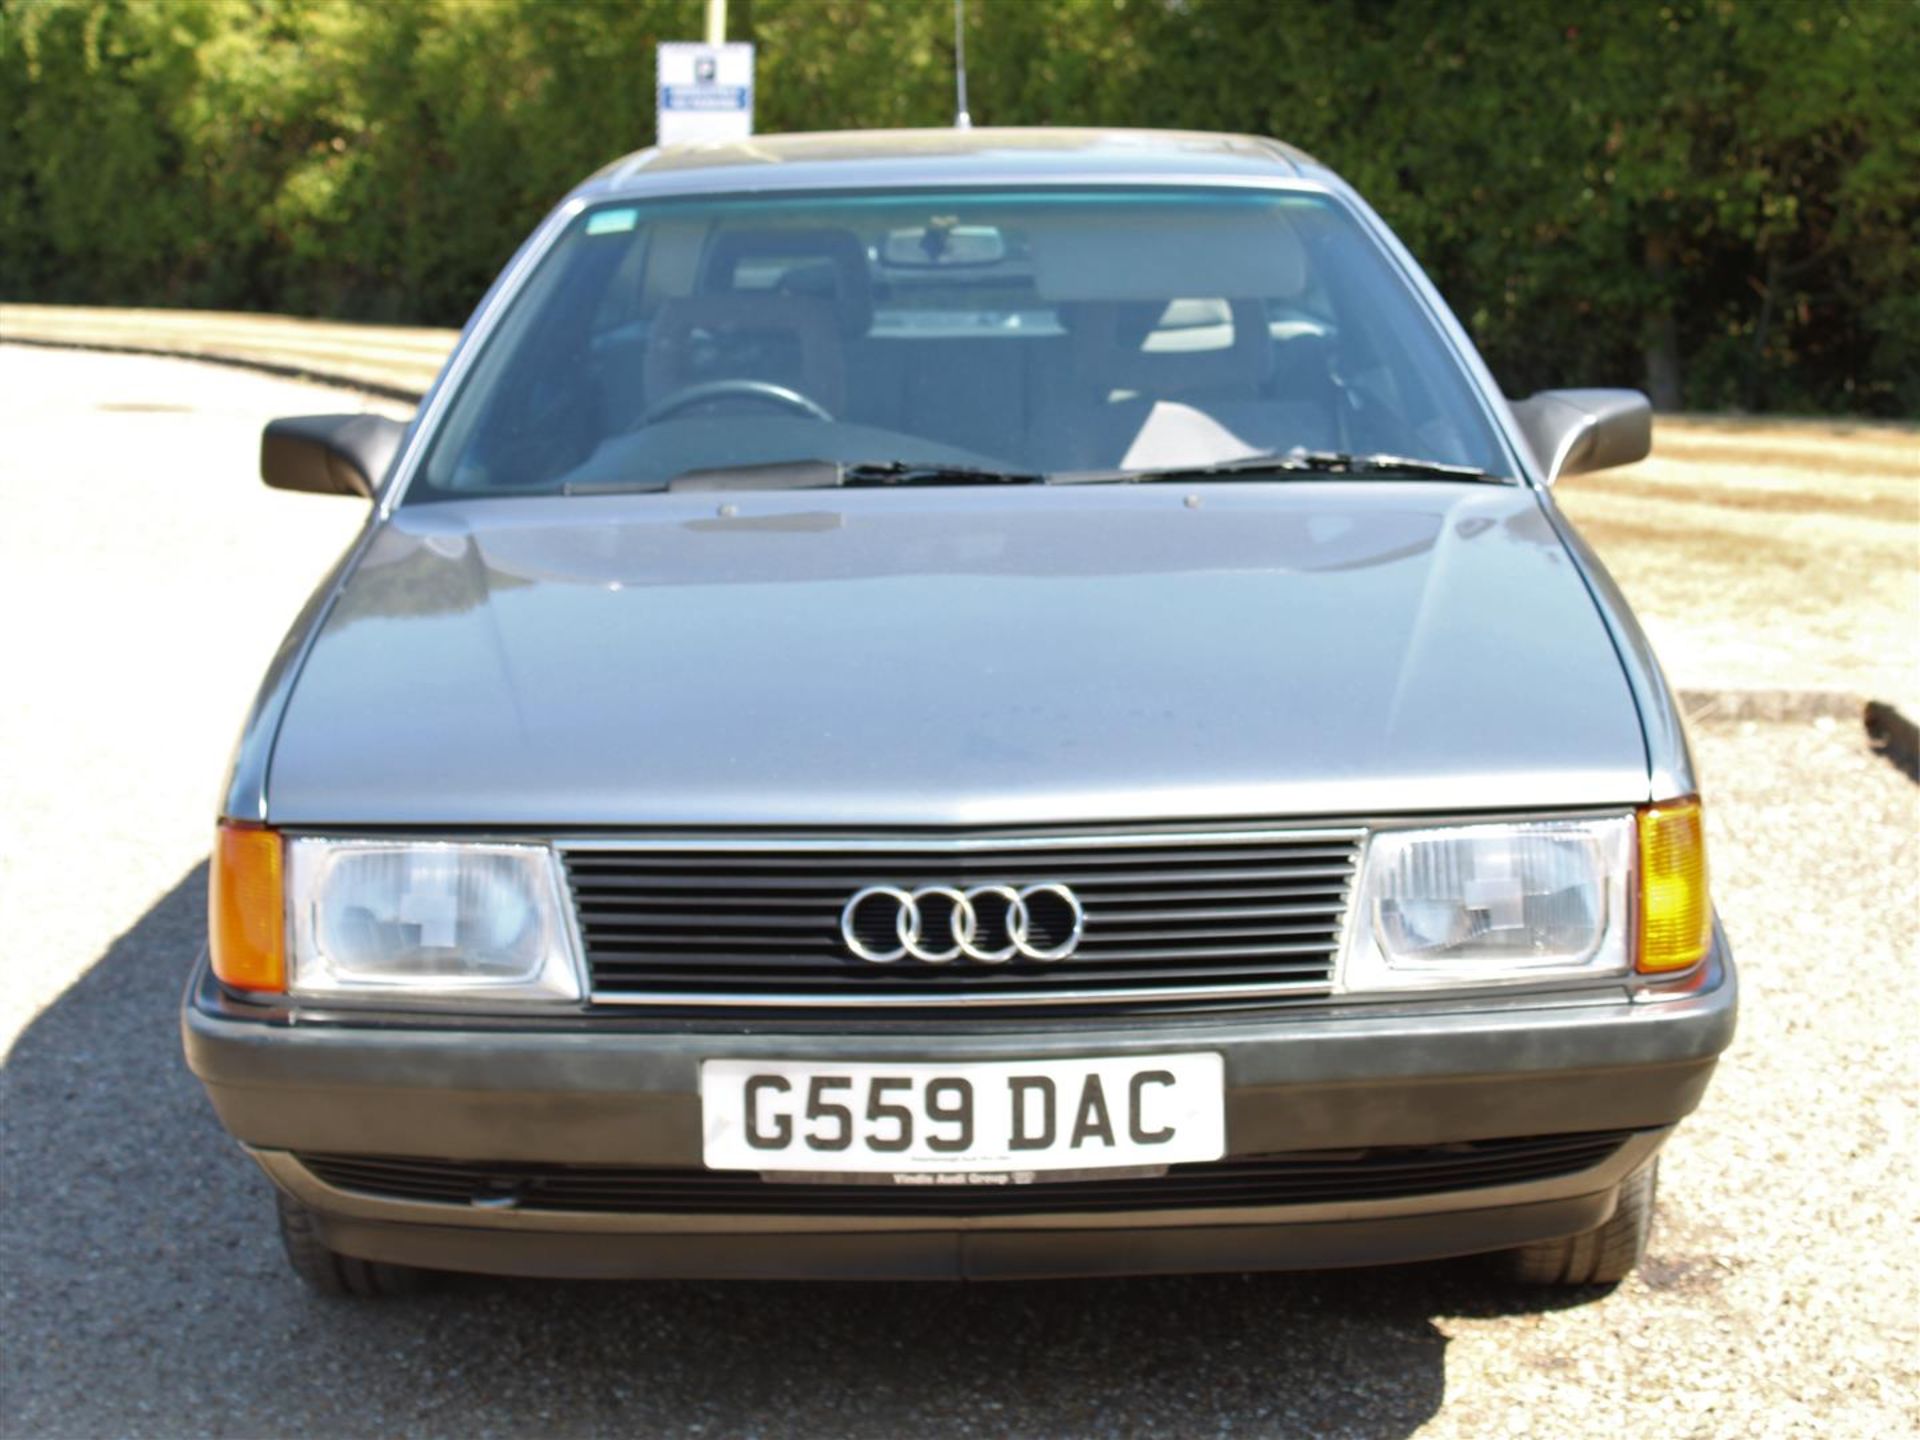 1990 Audi 100 Avant E Auto Estate - Image 2 of 24